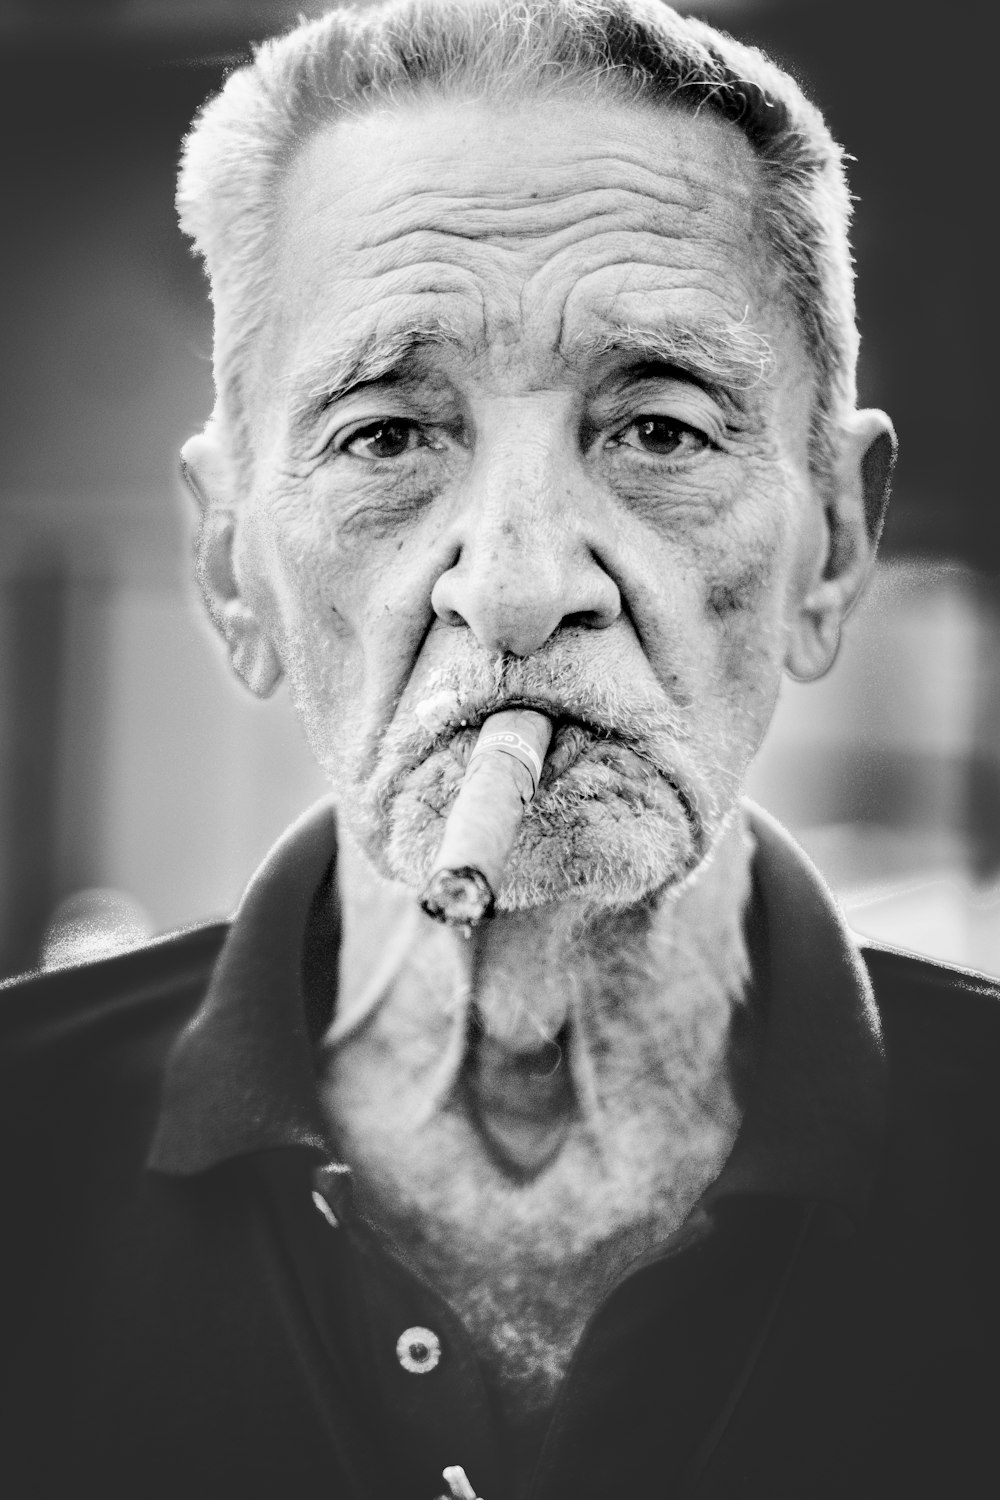 Fotografía en escala de grises de un hombre fumando puros